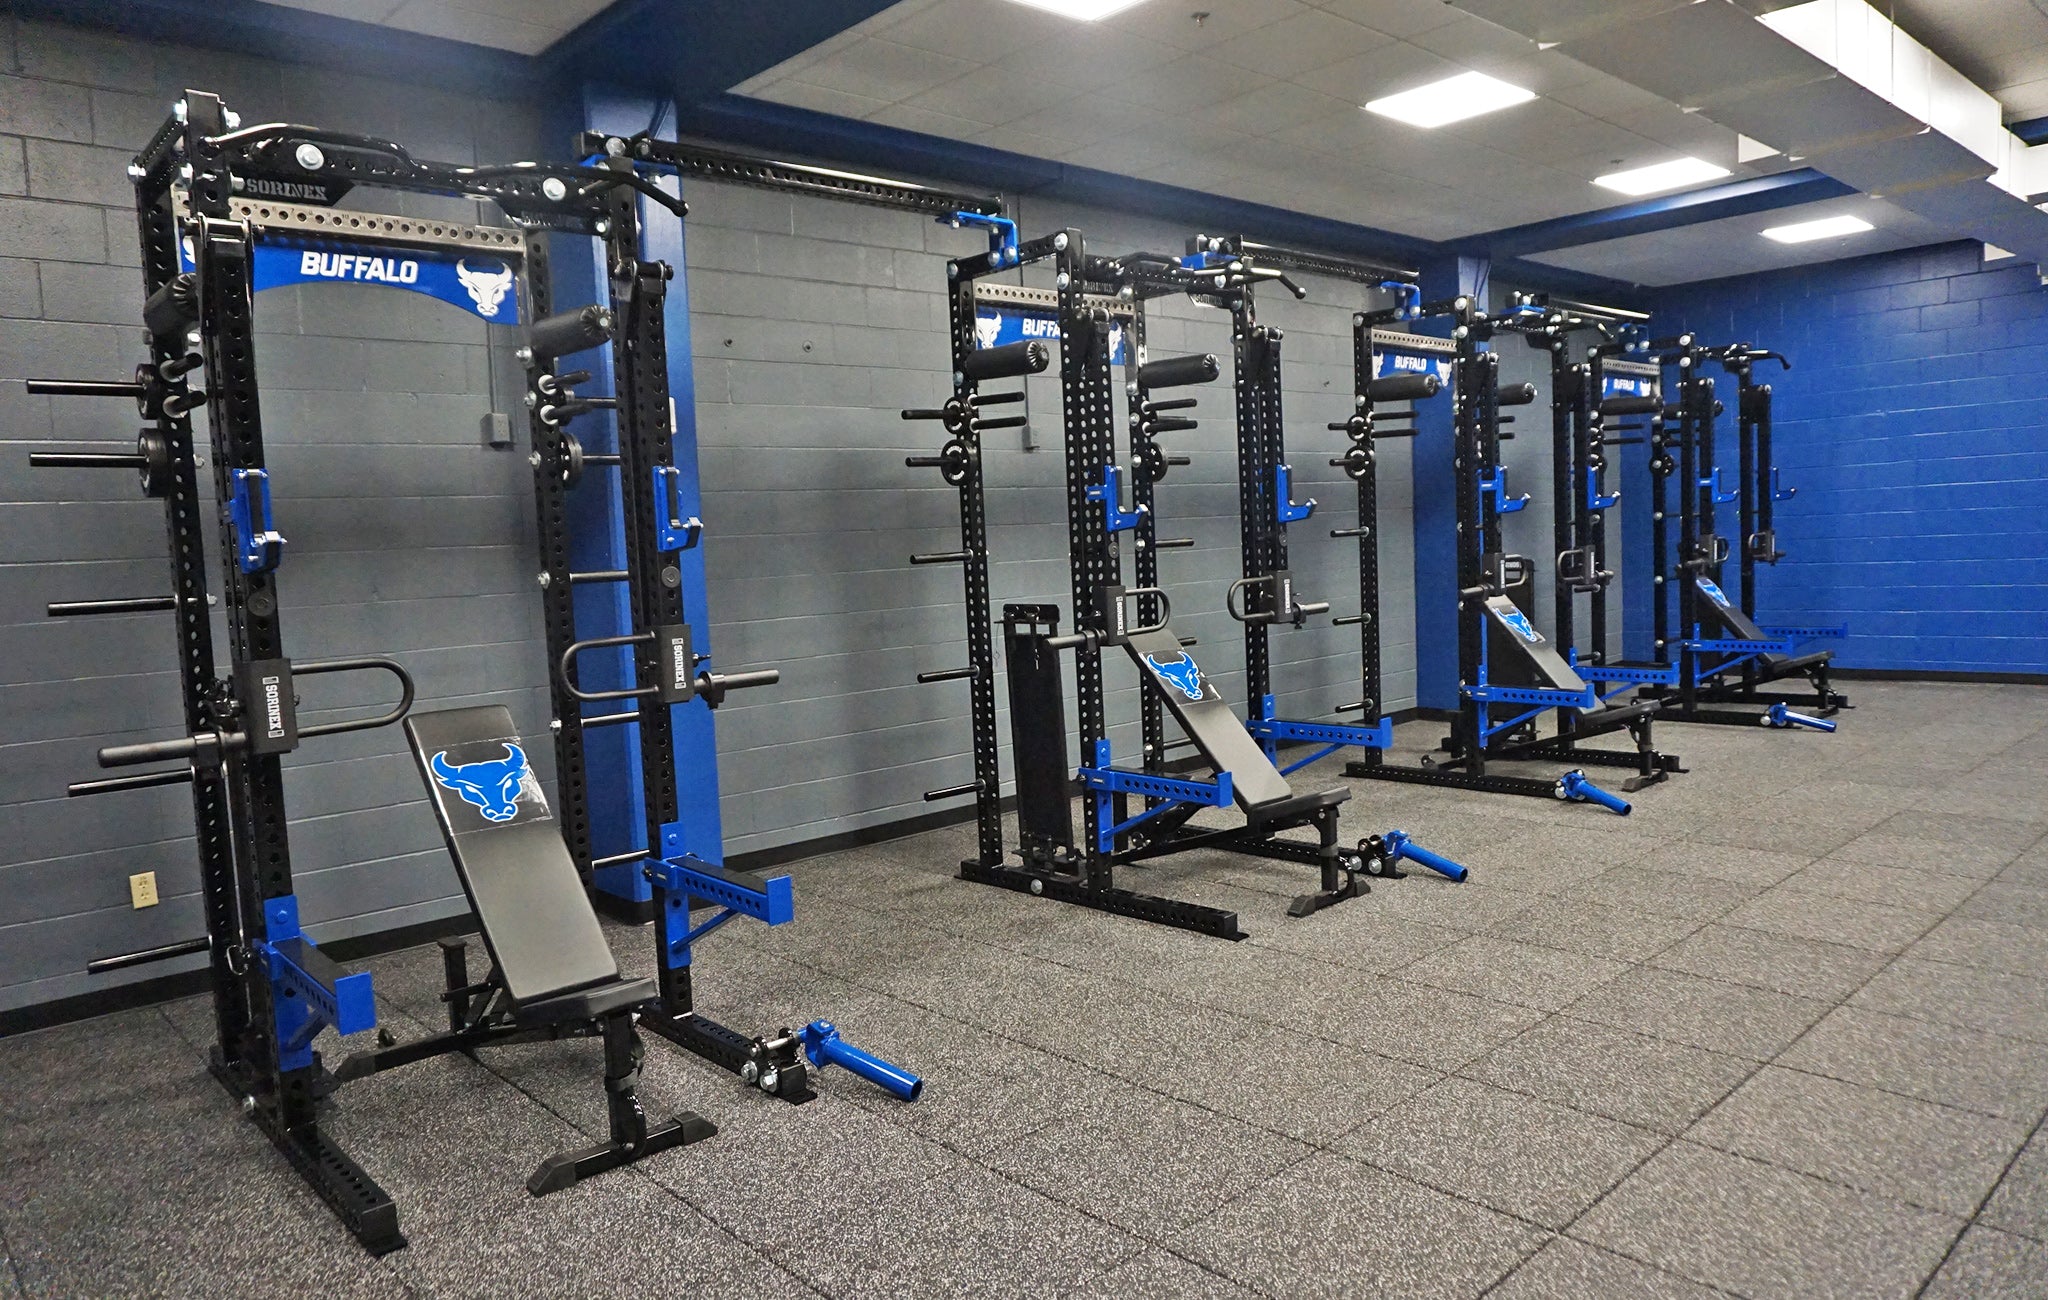 University of Buffalo Weight Room